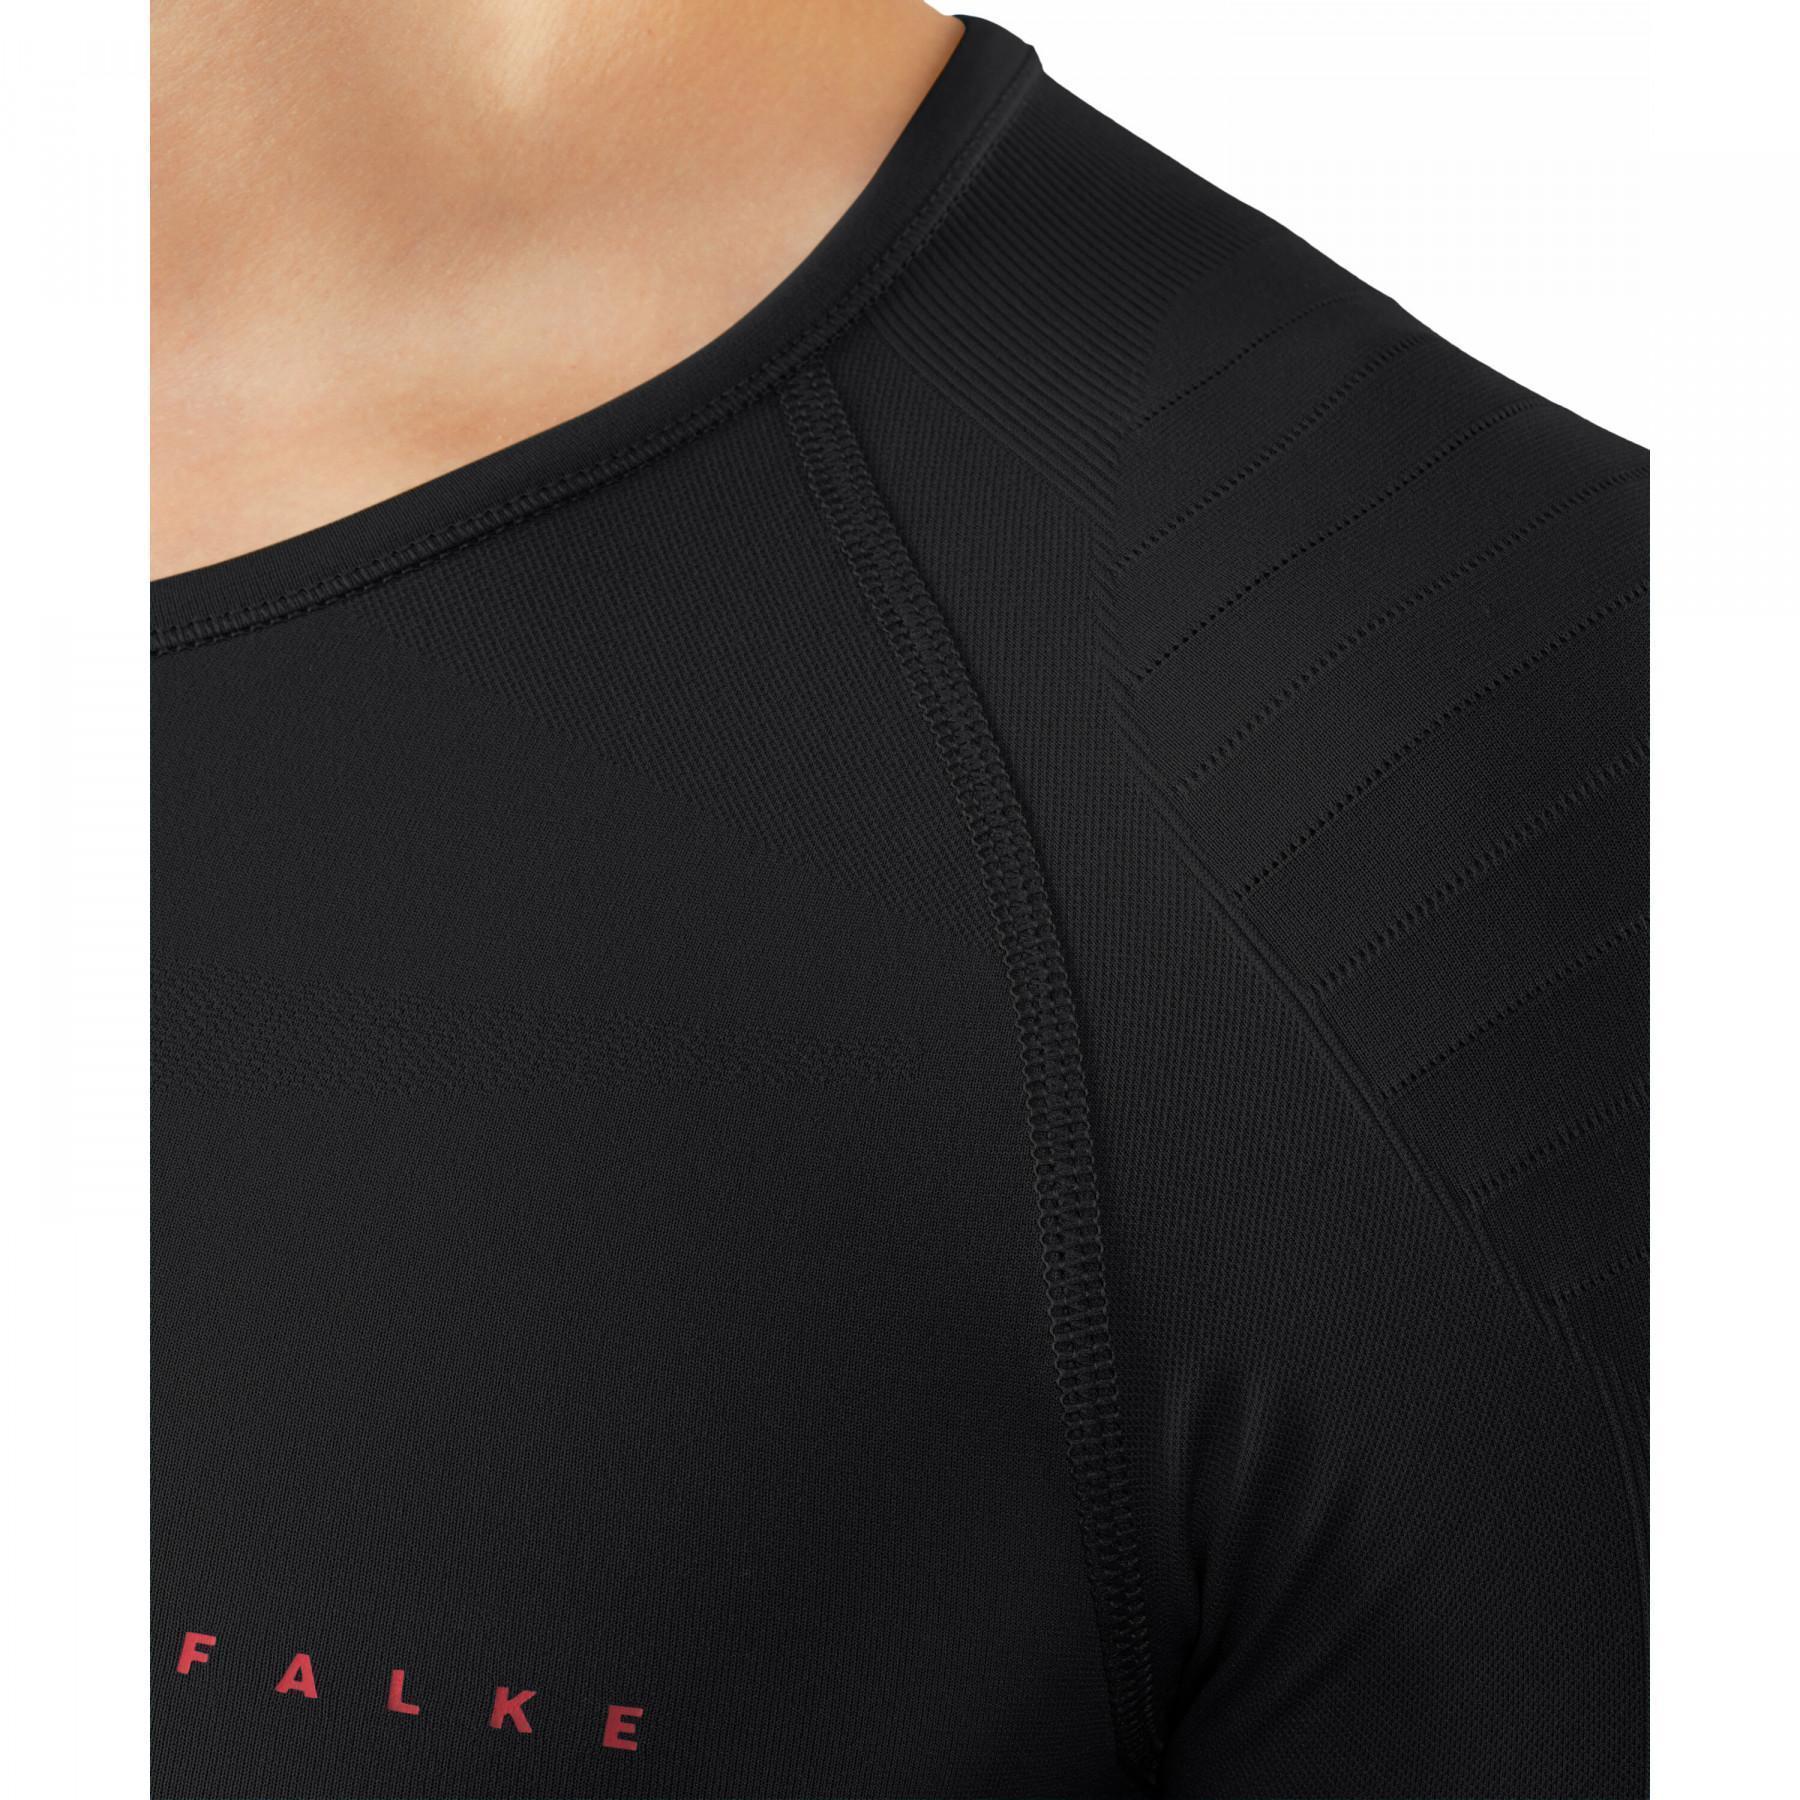 T-shirt Falke Warm